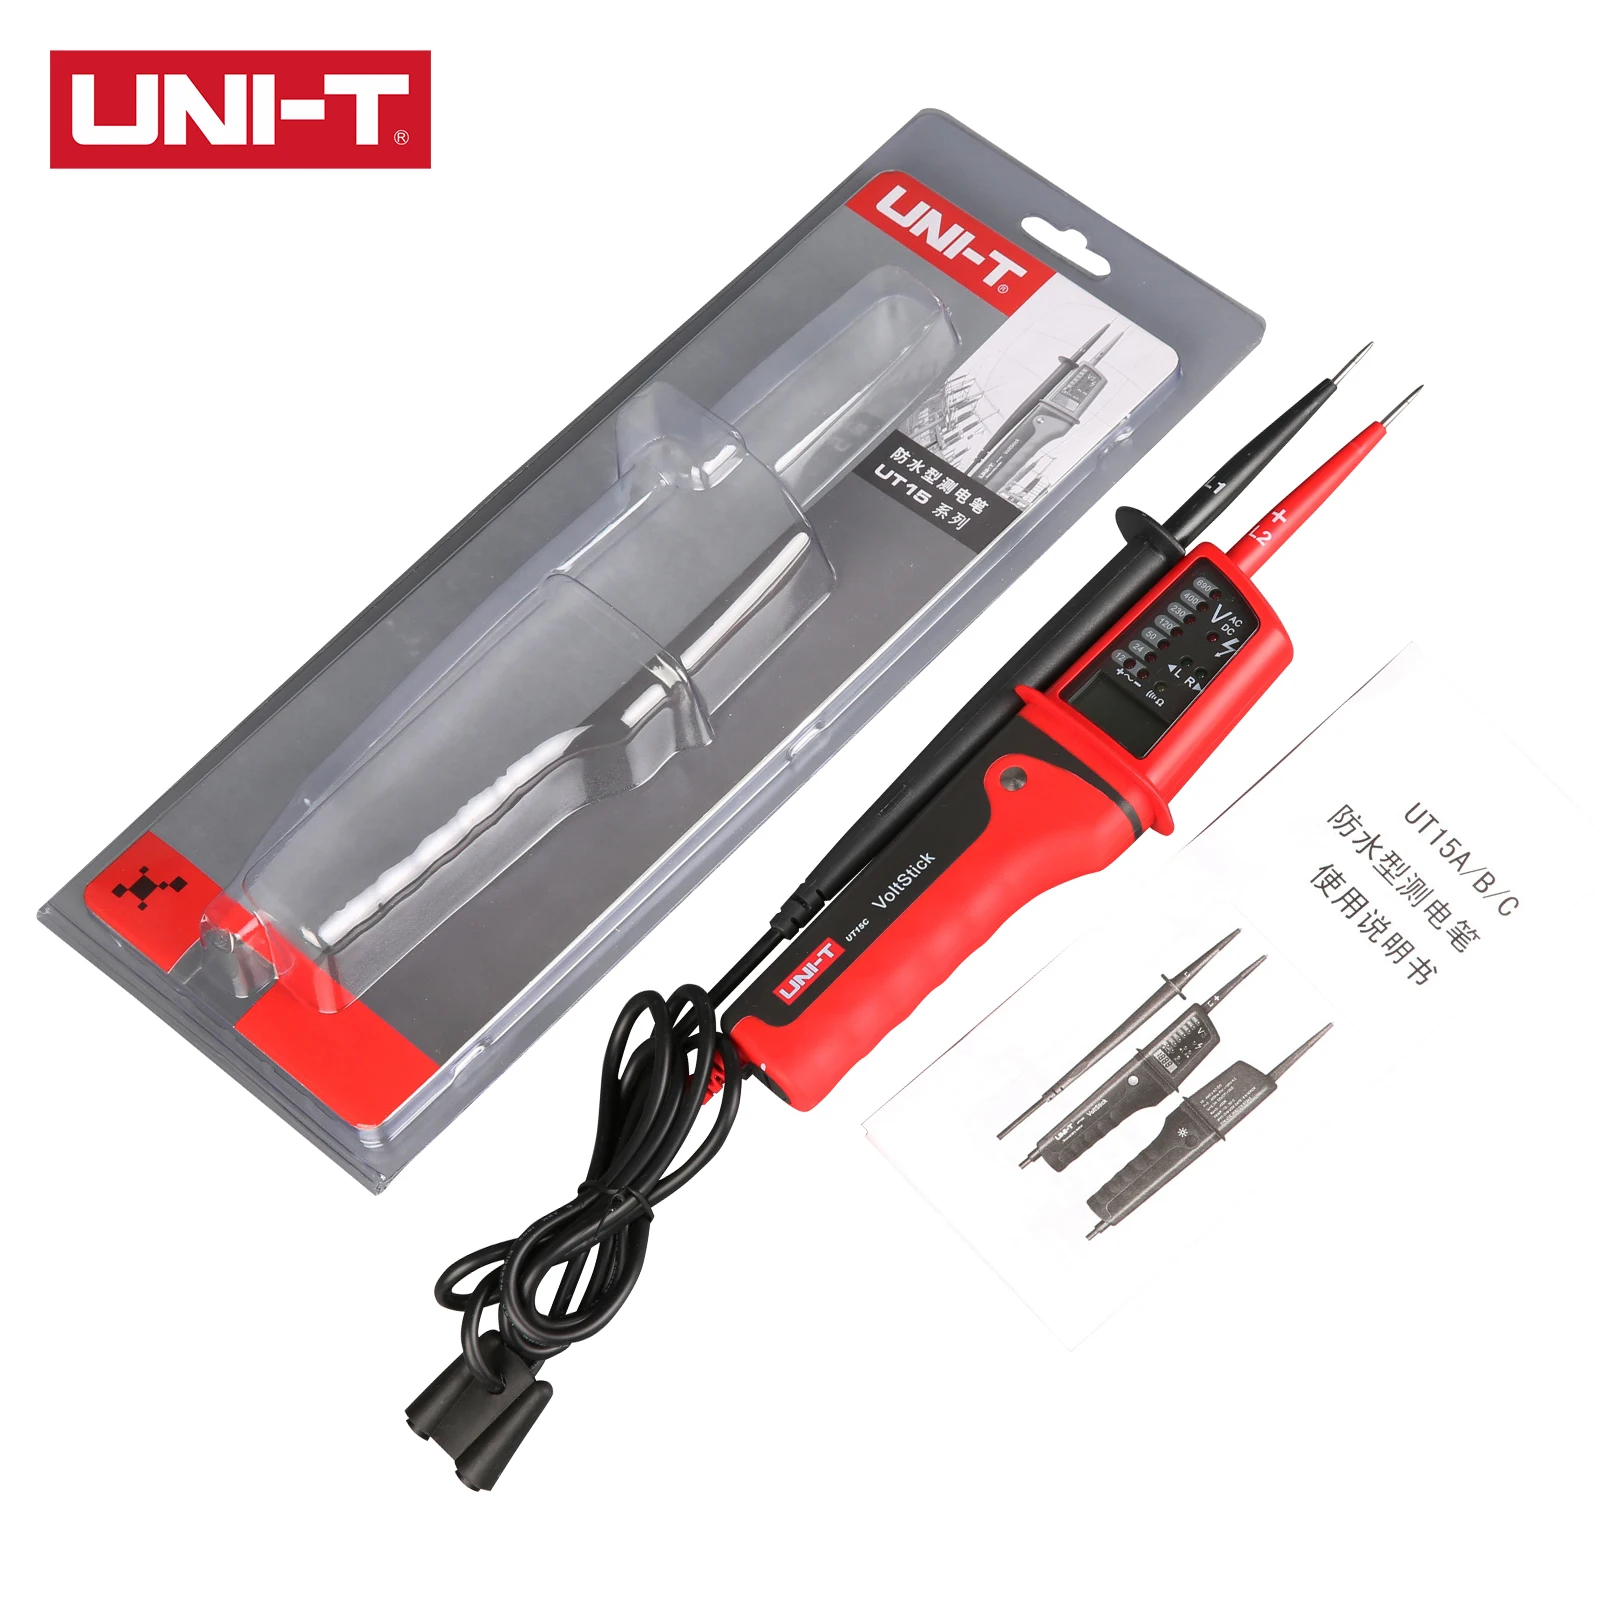 UNI-T UT15C Waterproof LCD Digital Electrical Voltage Continuity Circuit Tester 